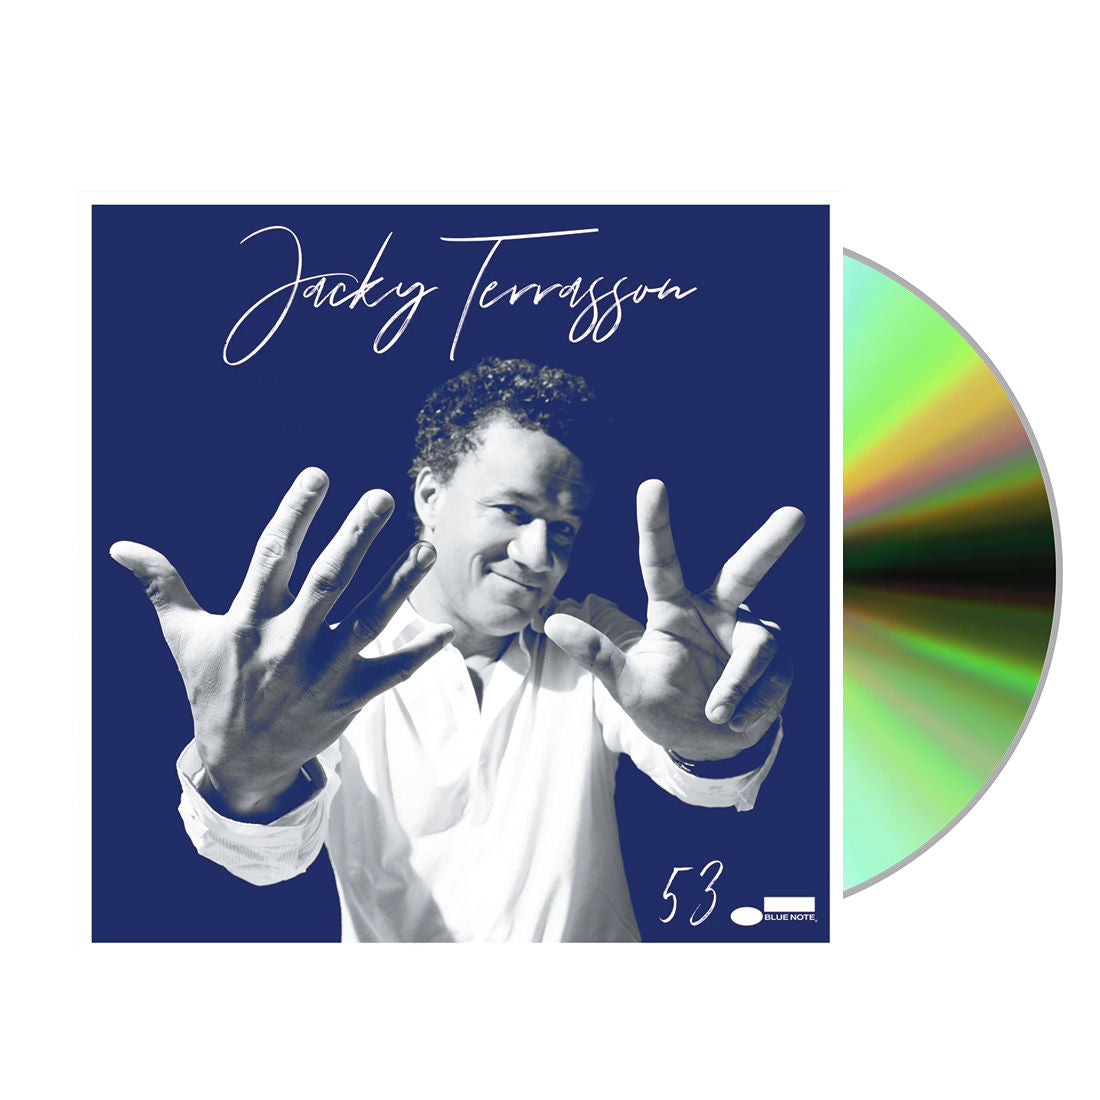 Jacky Terrasson 53 Blue Note Records